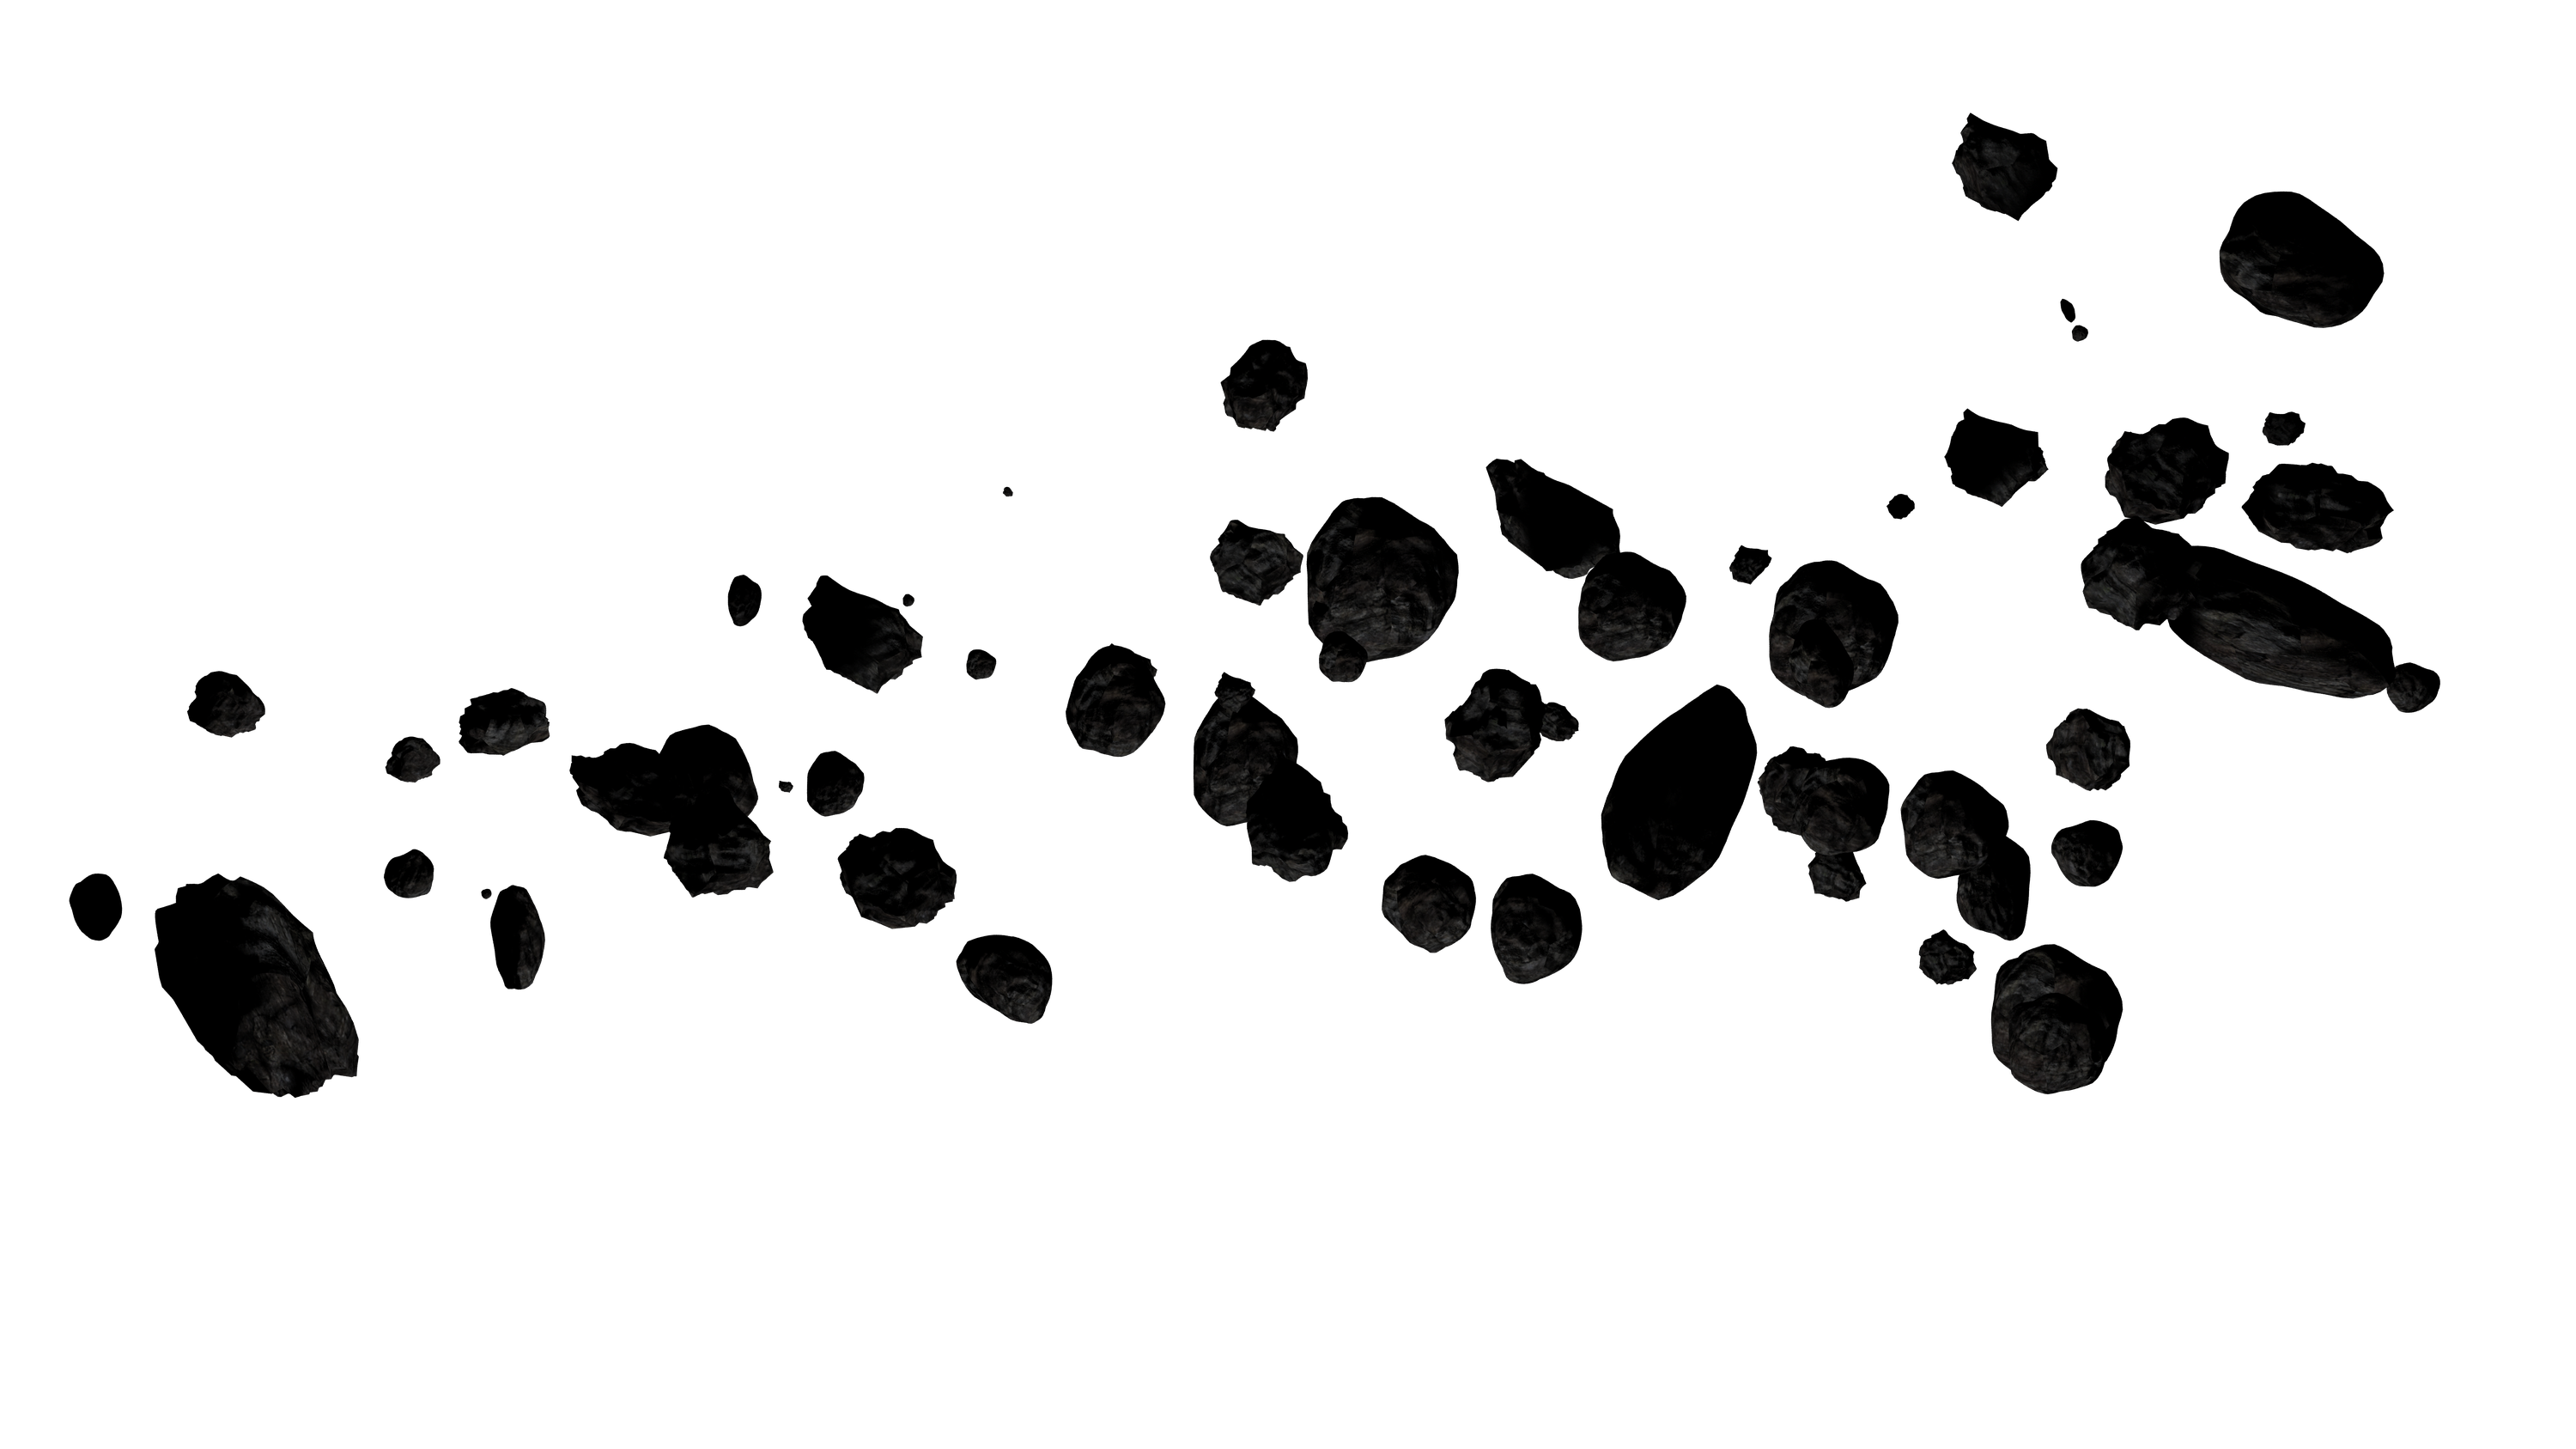 transparent asteroid mon